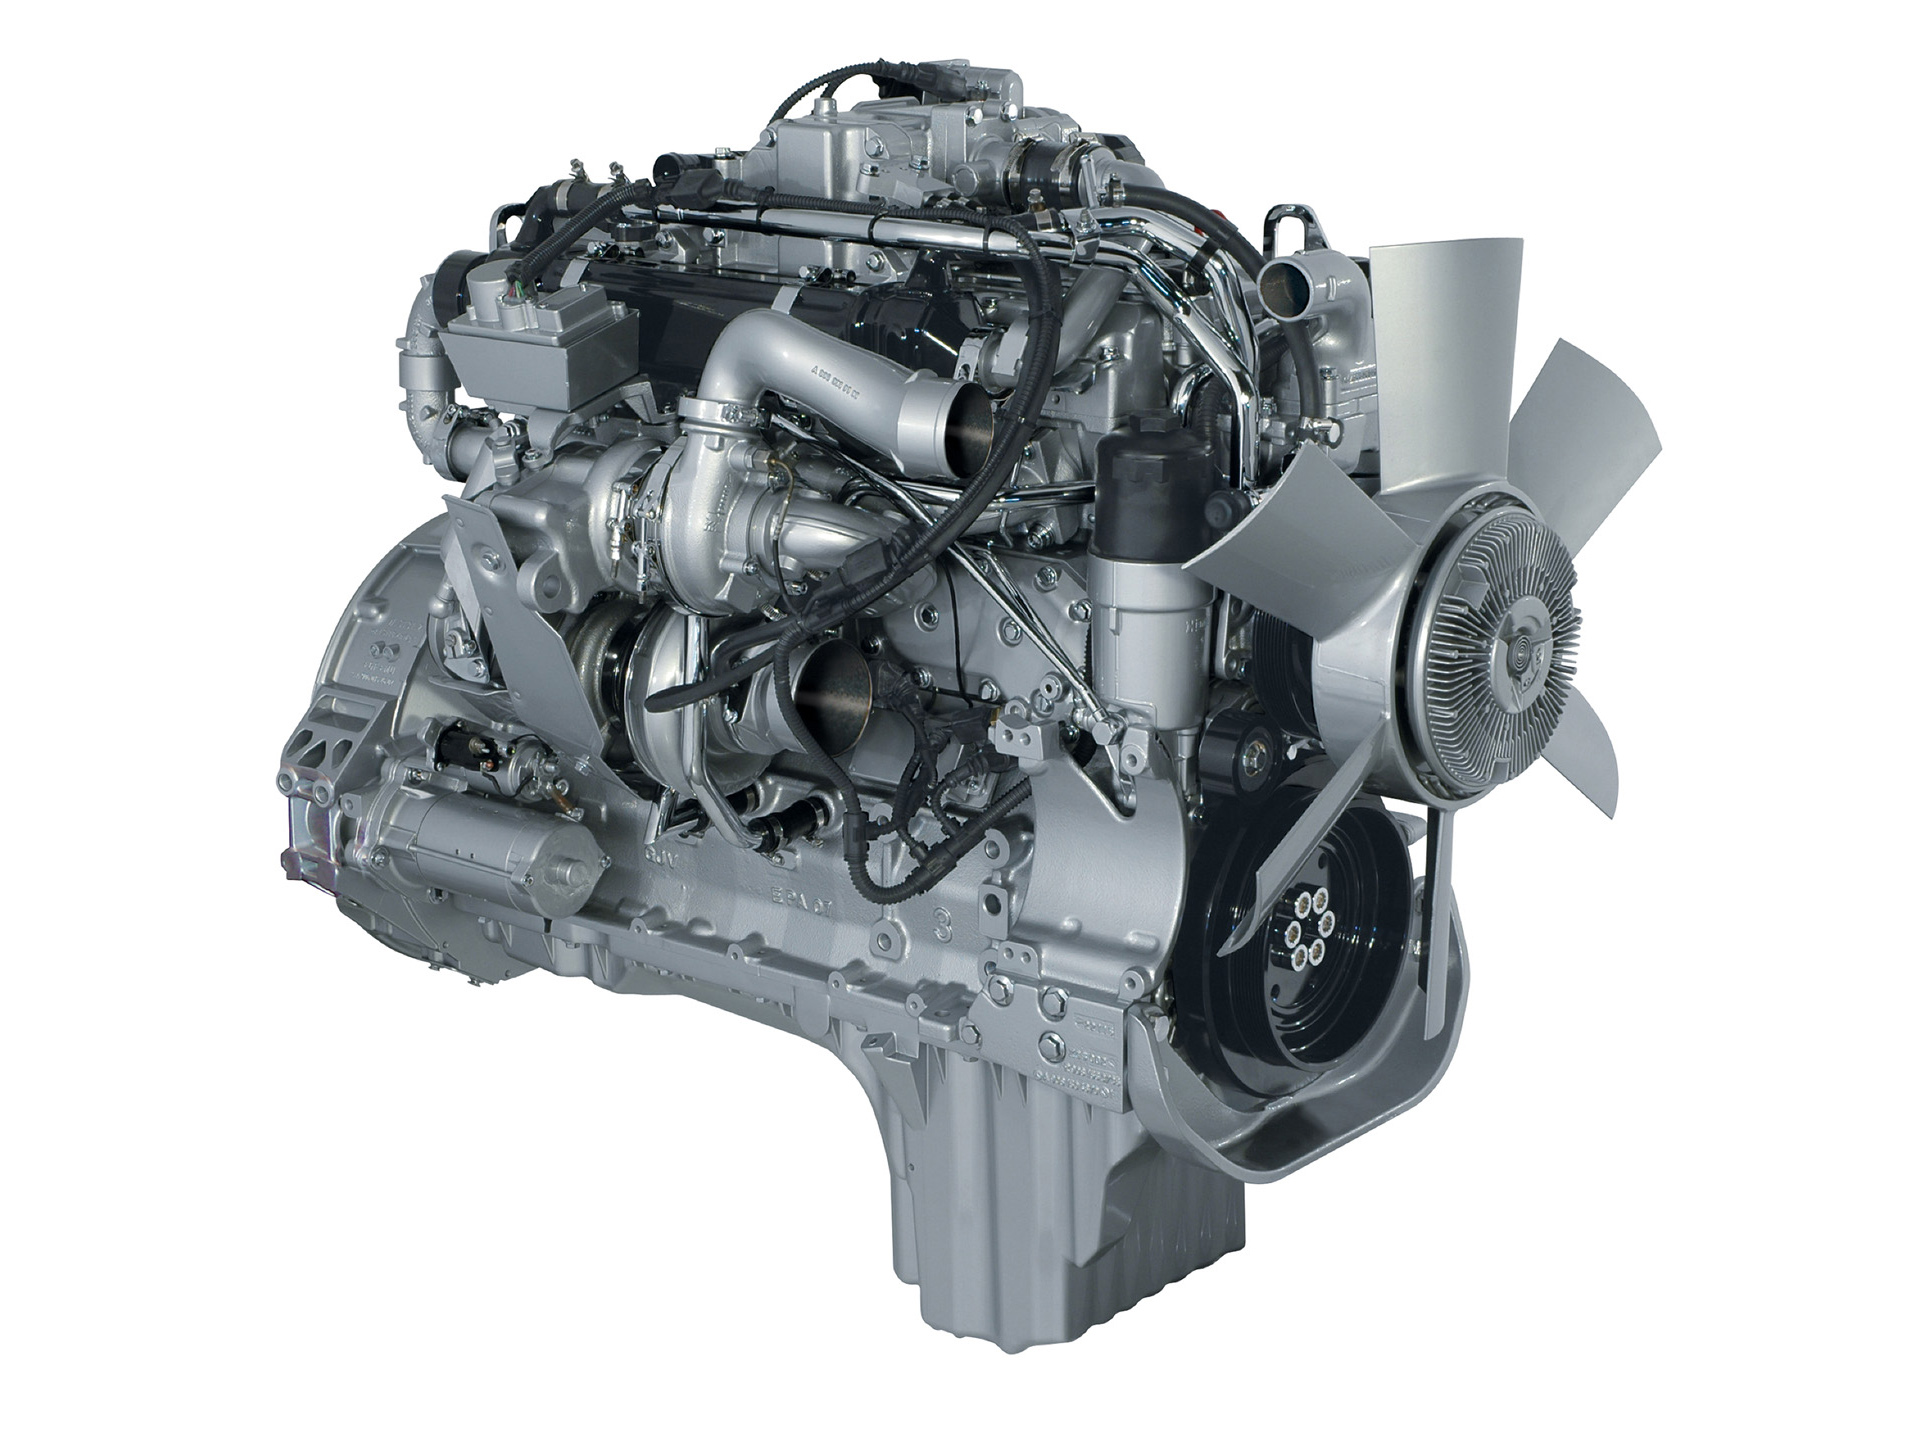 Detroit Diesel Mbe Engine Picture Photo